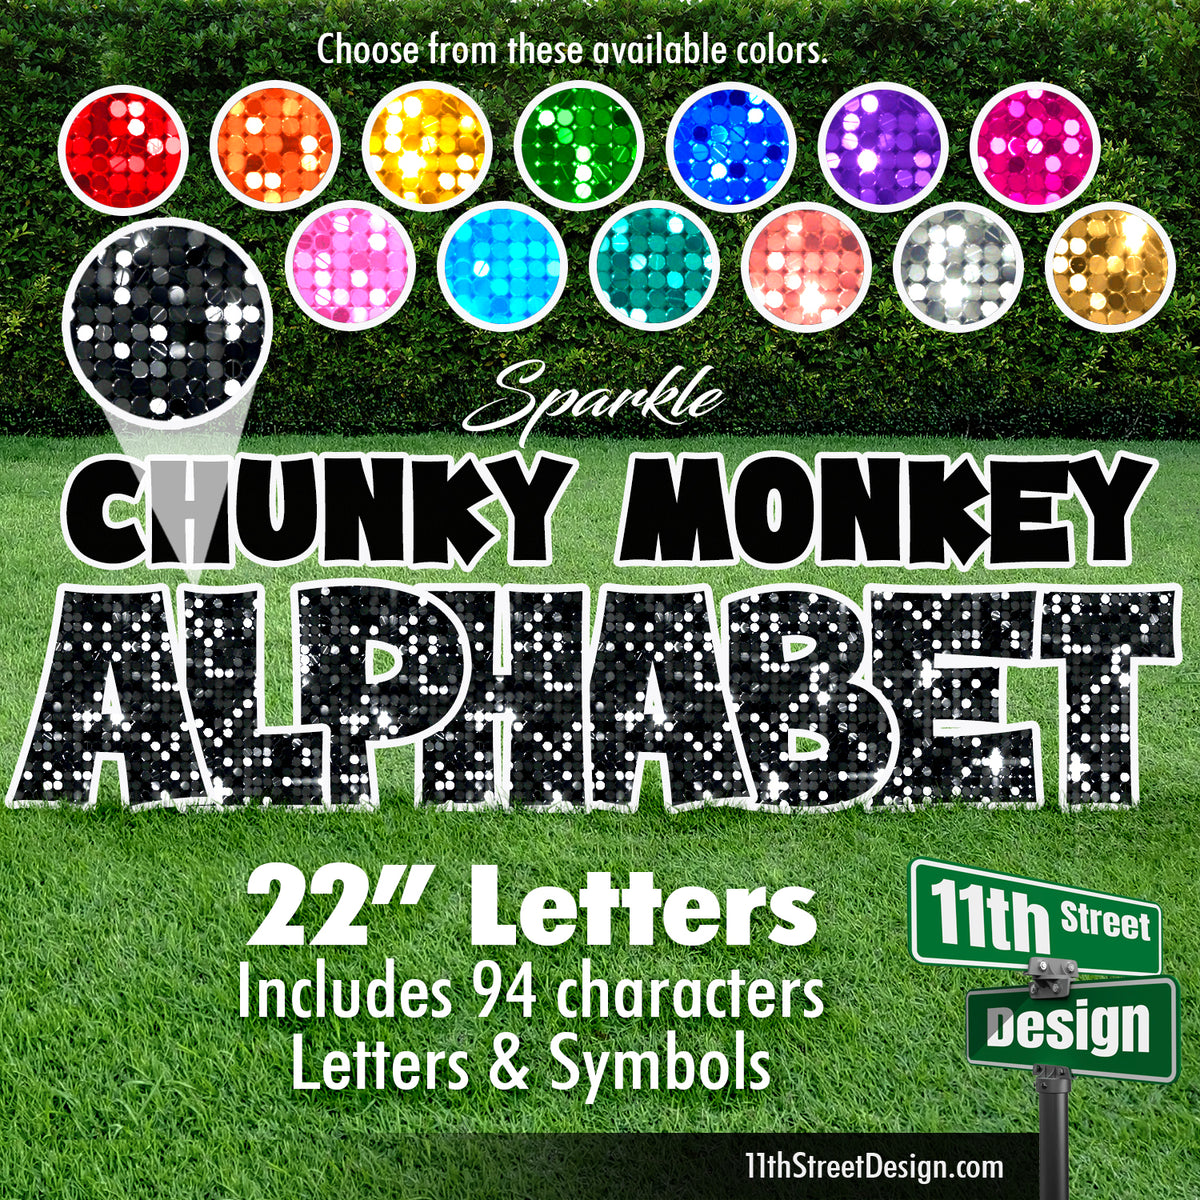 Sparkle 22&quot; Chunky Monkey Full Alphabet Yard Card Set Includes Letters &amp; Symbols